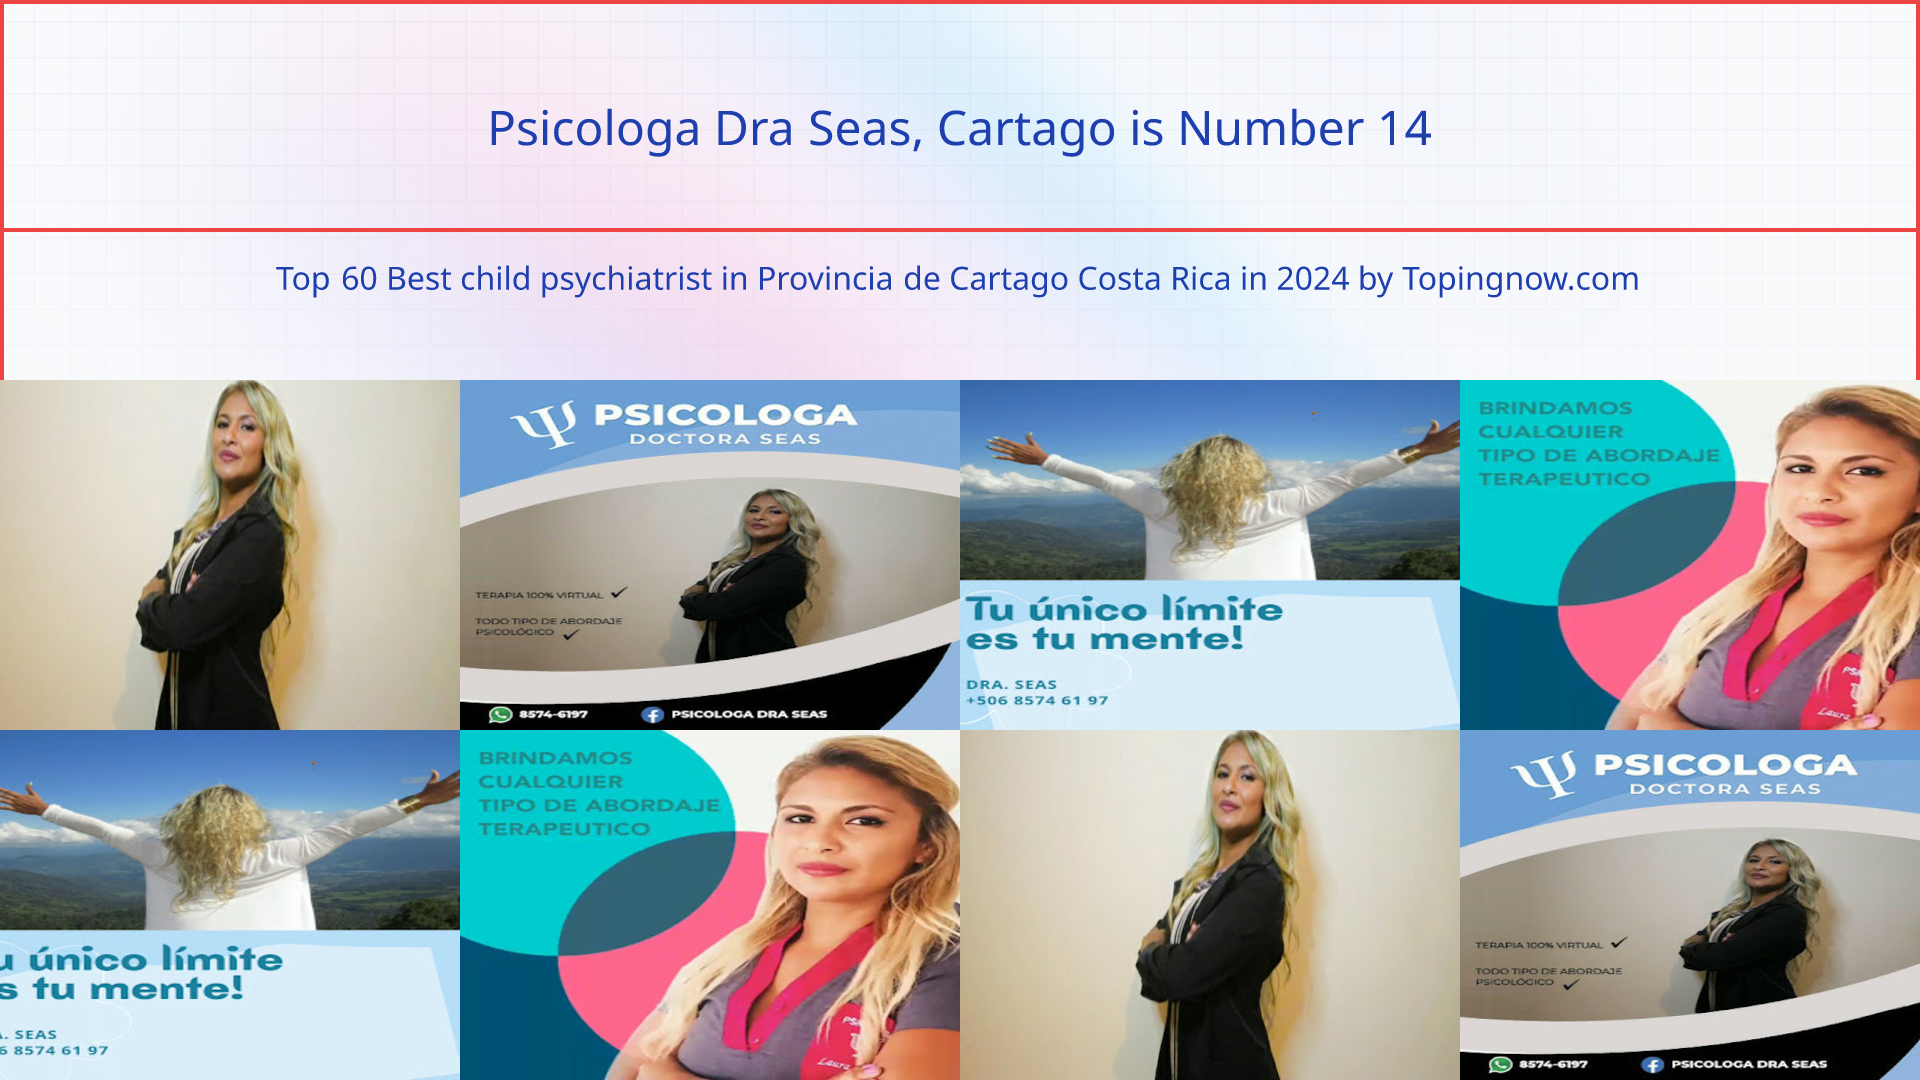 Psicologa Dra Seas, Cartago: Top 60 Best child psychiatrist in Provincia de Cartago Costa Rica in 2024